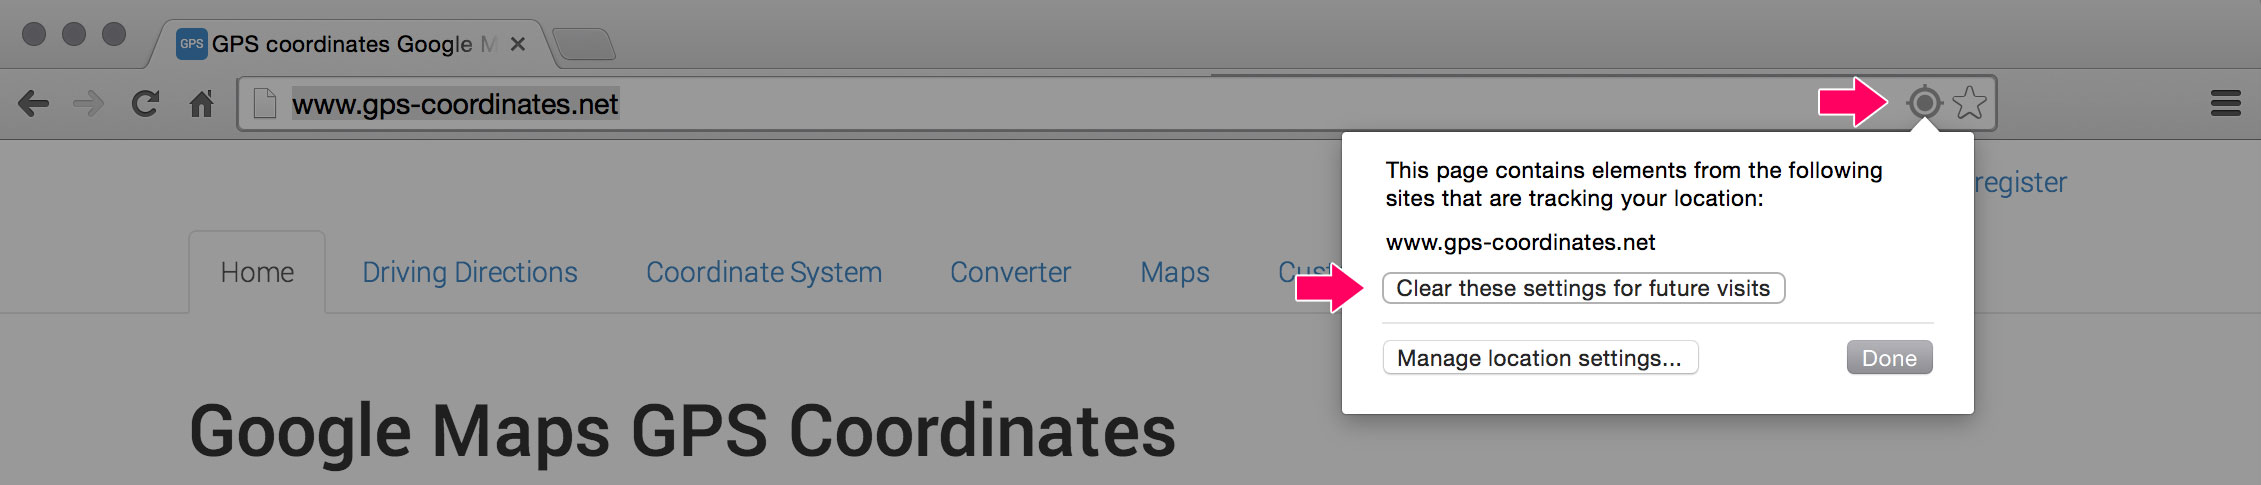 Chrome manage location settings